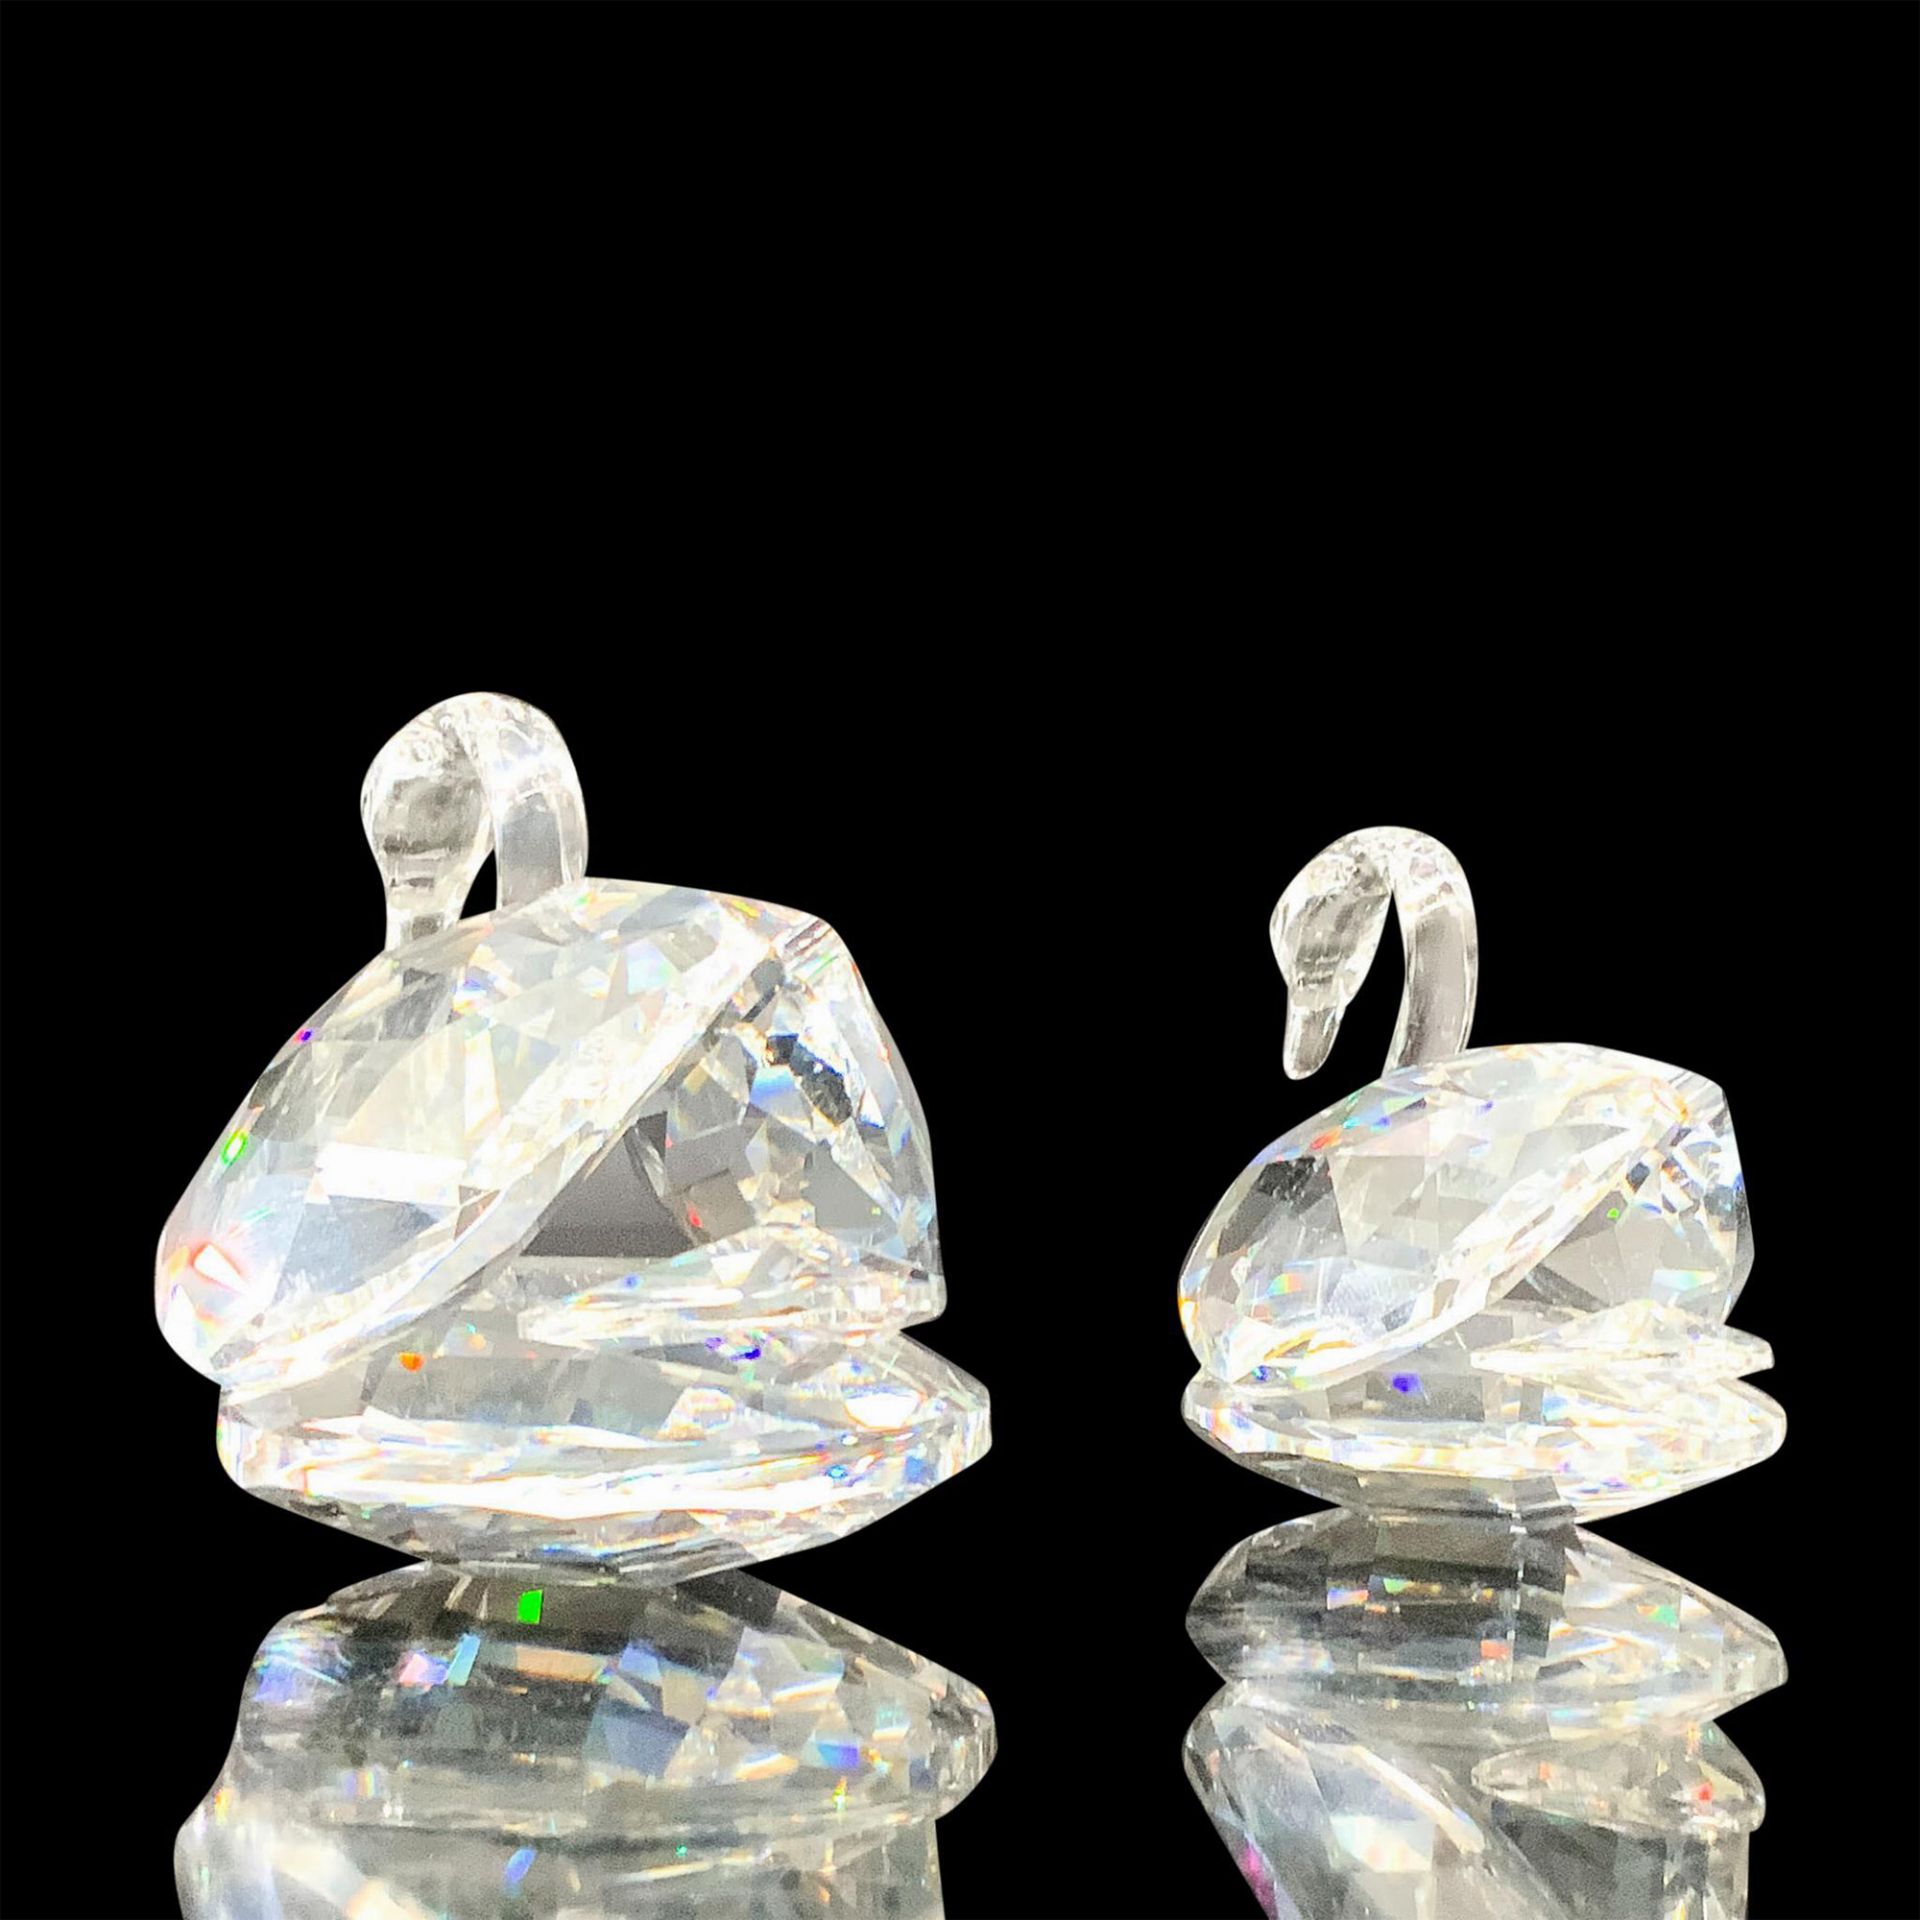 Pair of Swarovski Crystal Swan Figurines 010005 and 010006 - Image 2 of 3